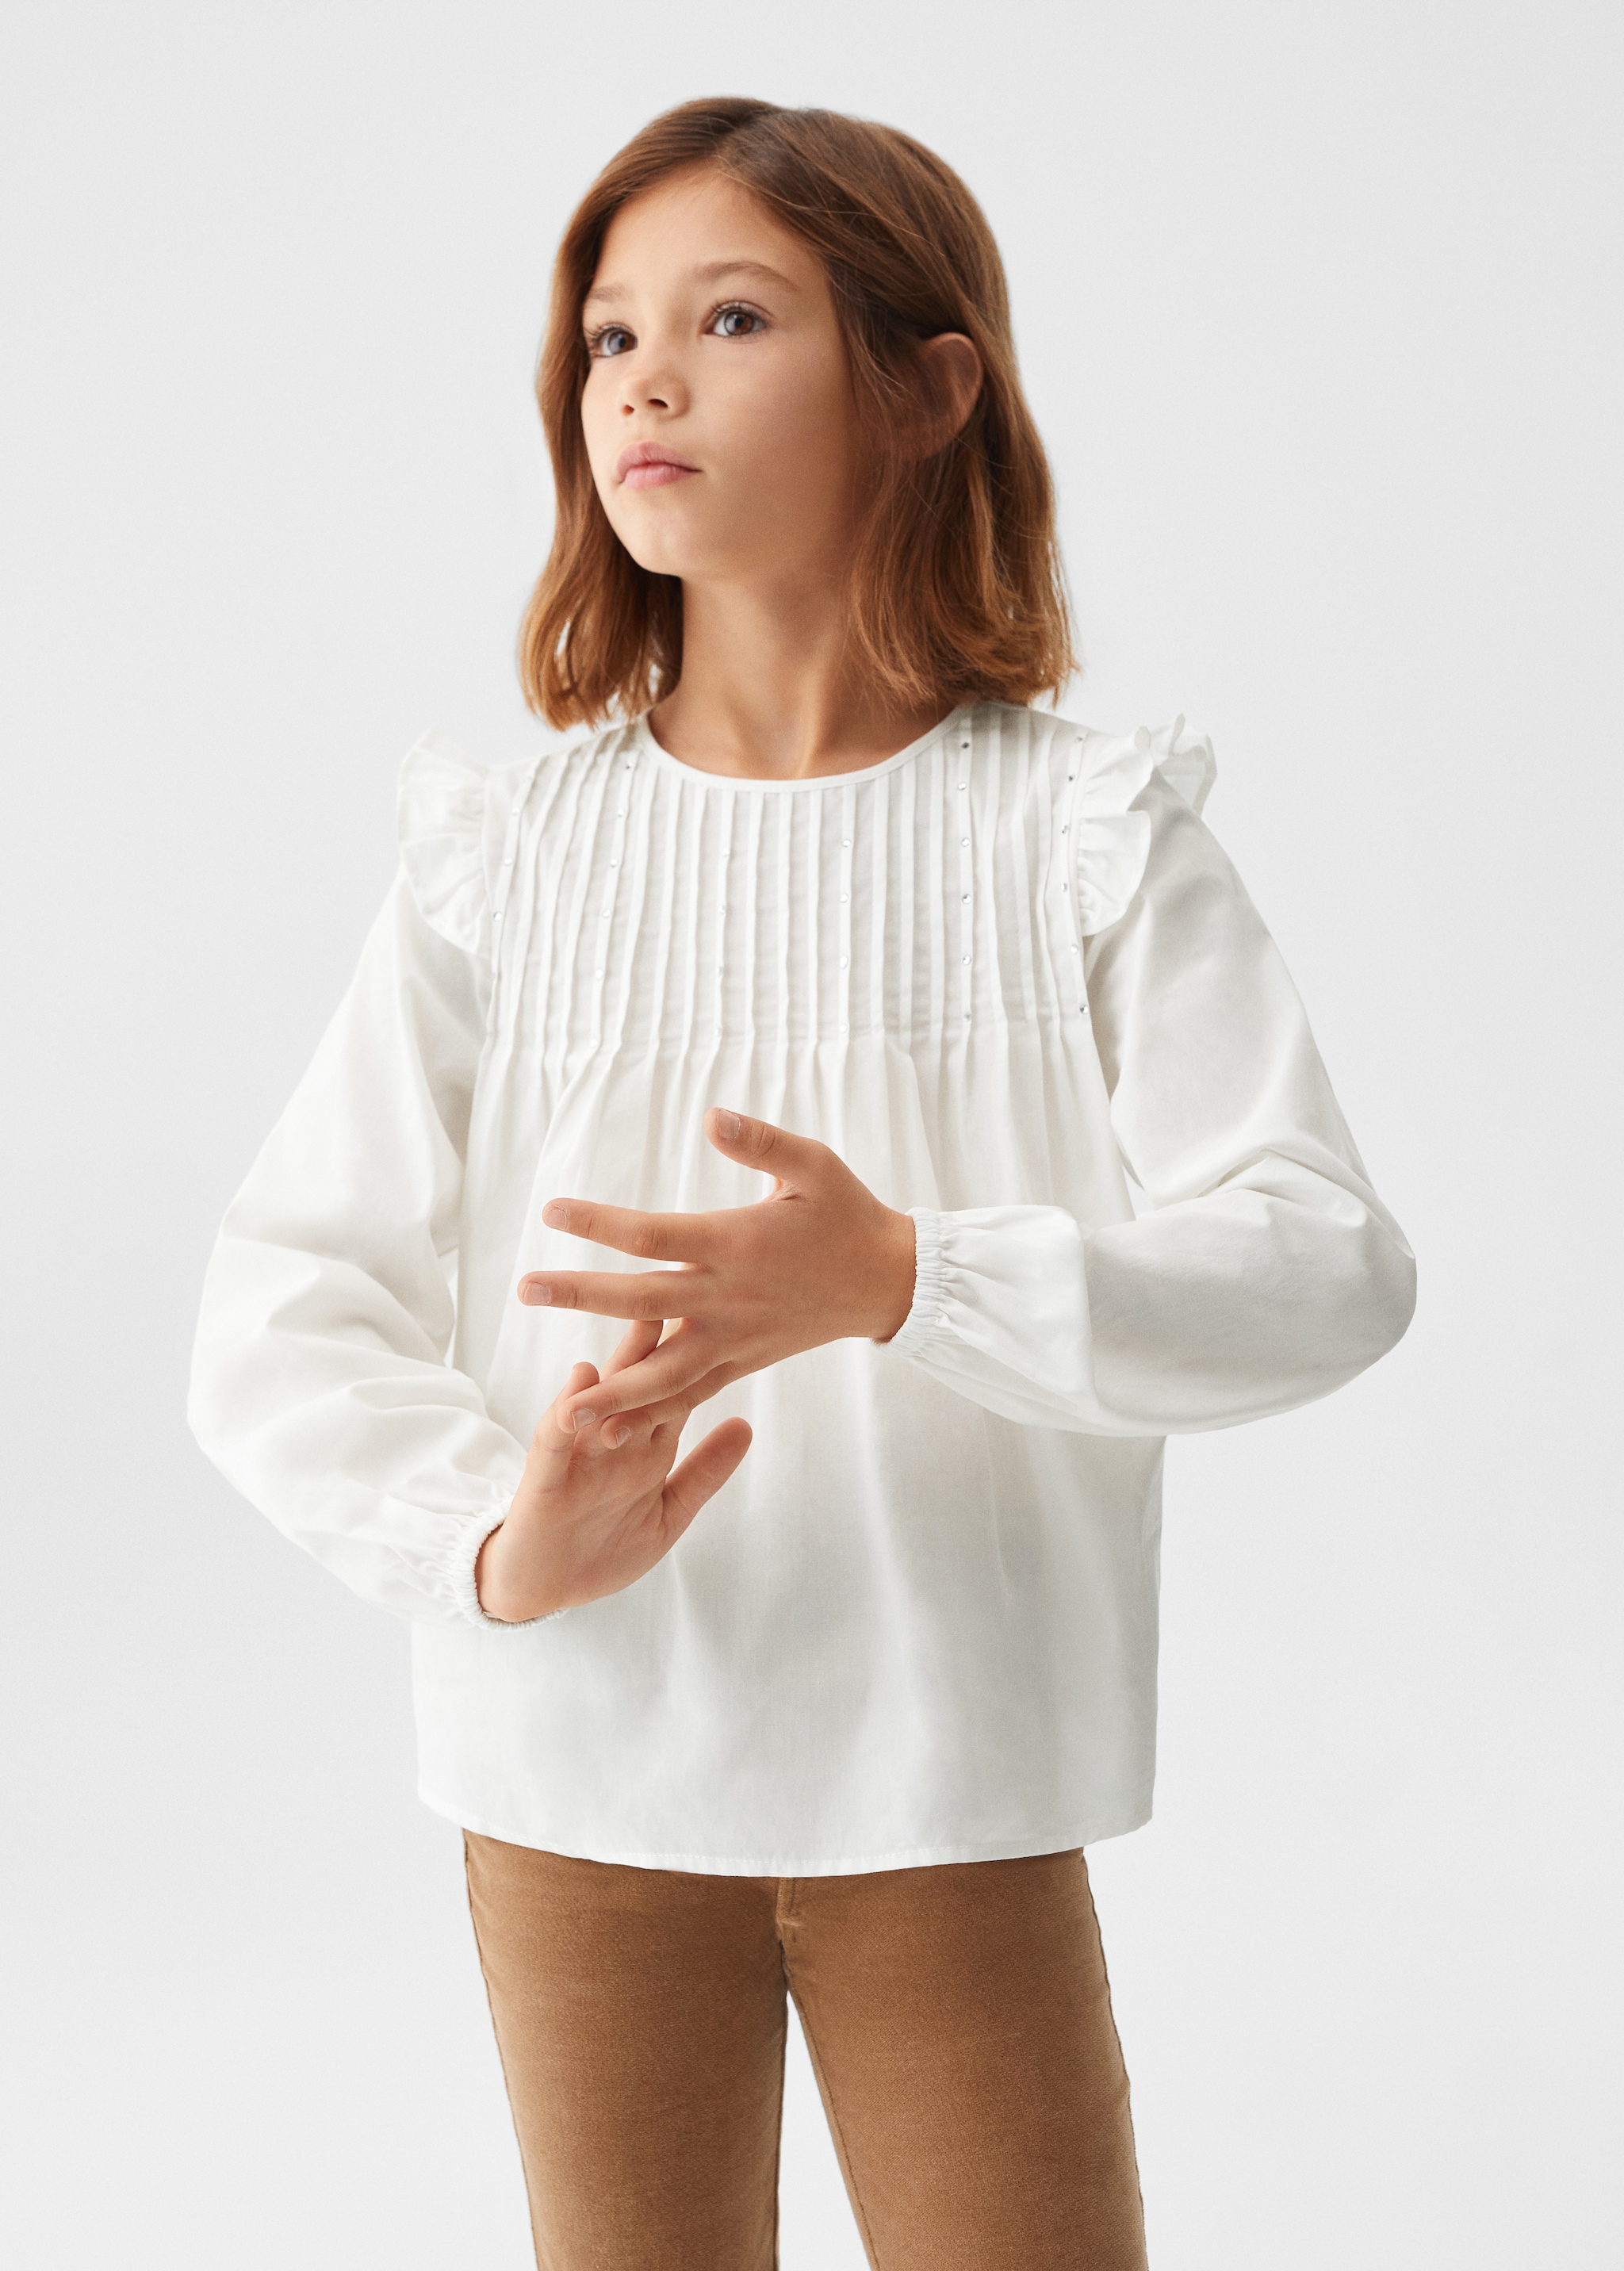 Ruffled cotton blouse - Medium plane